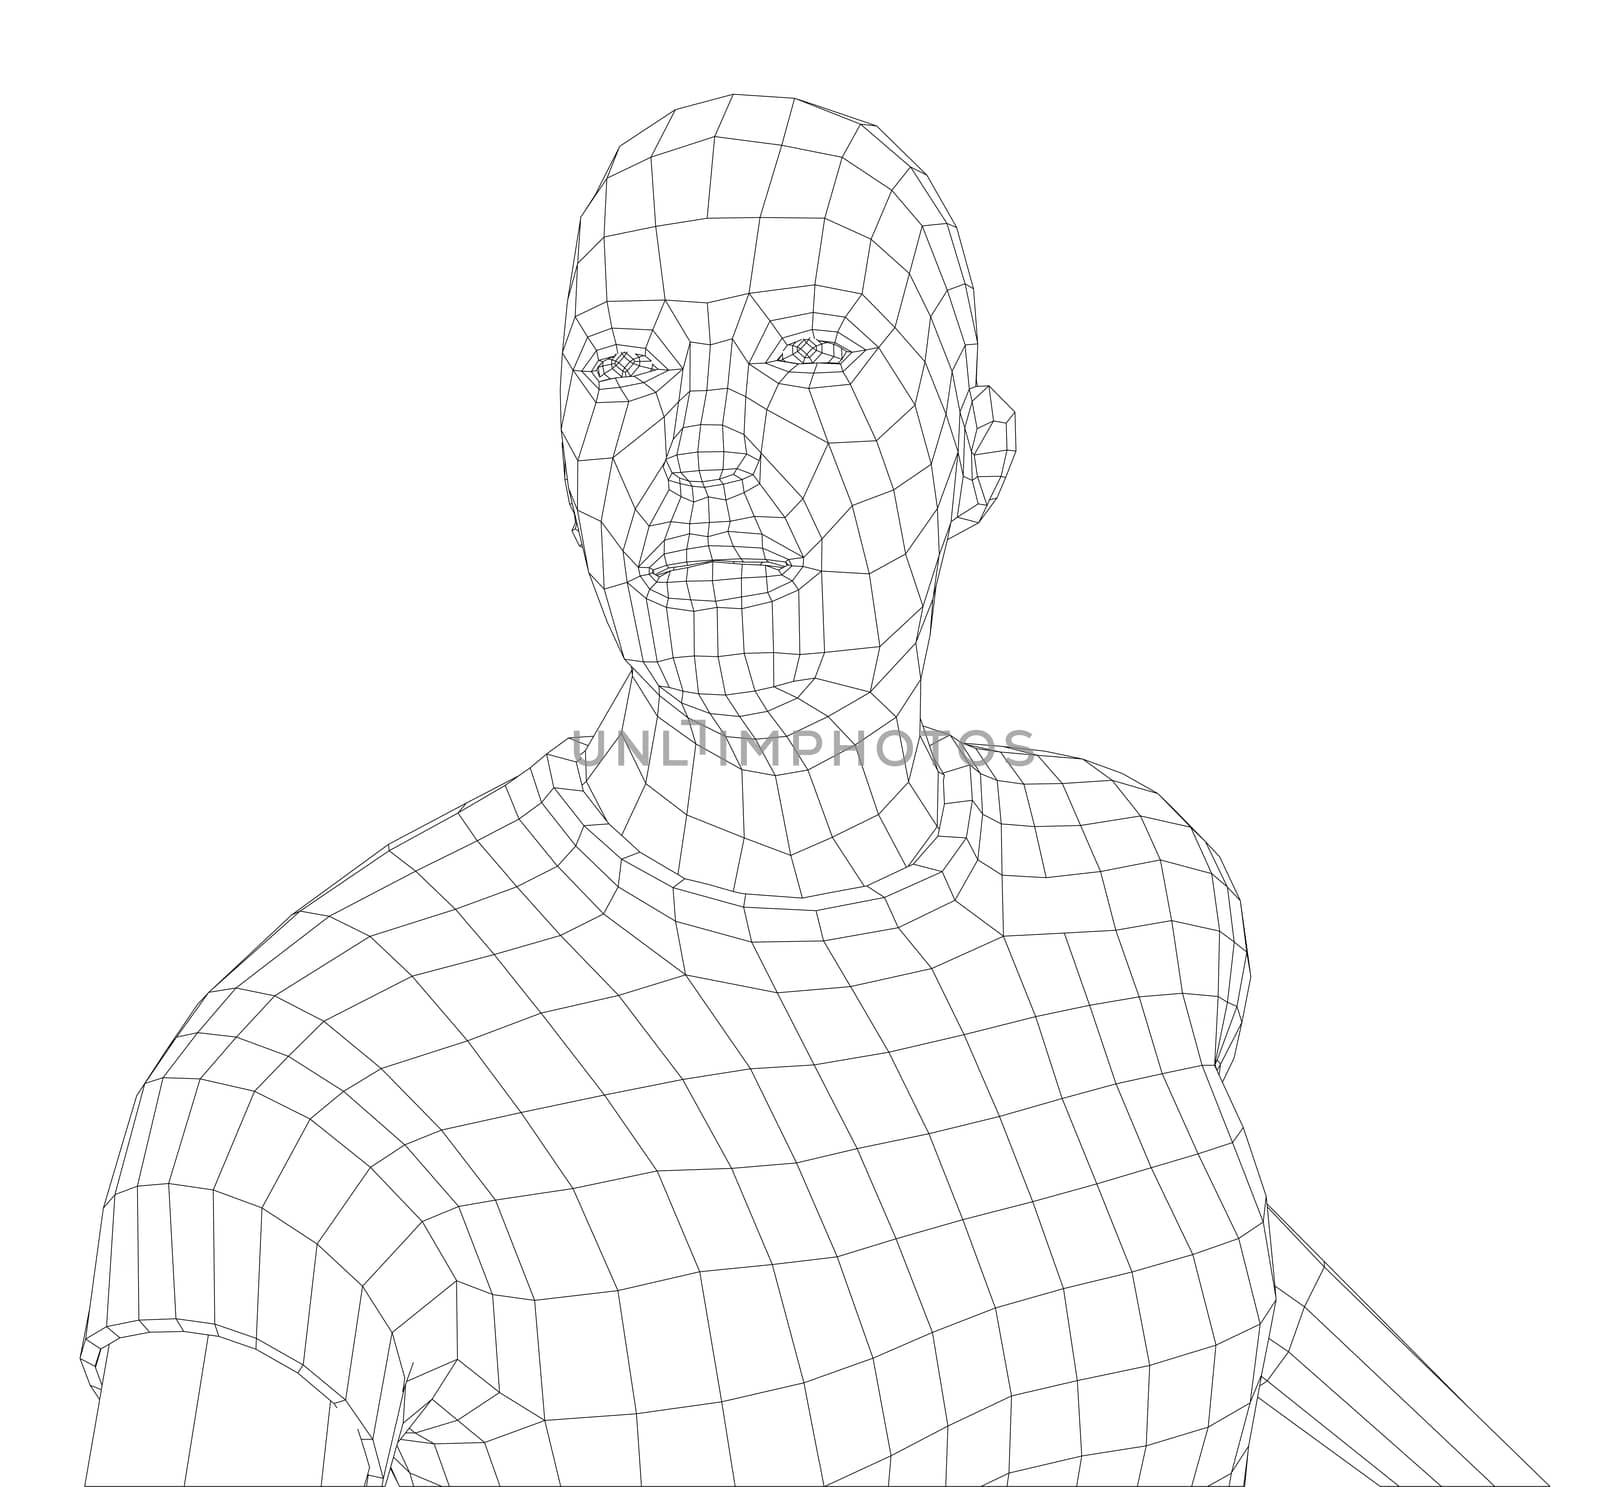 Wire frame mans head. 3d illustration. Technology concept